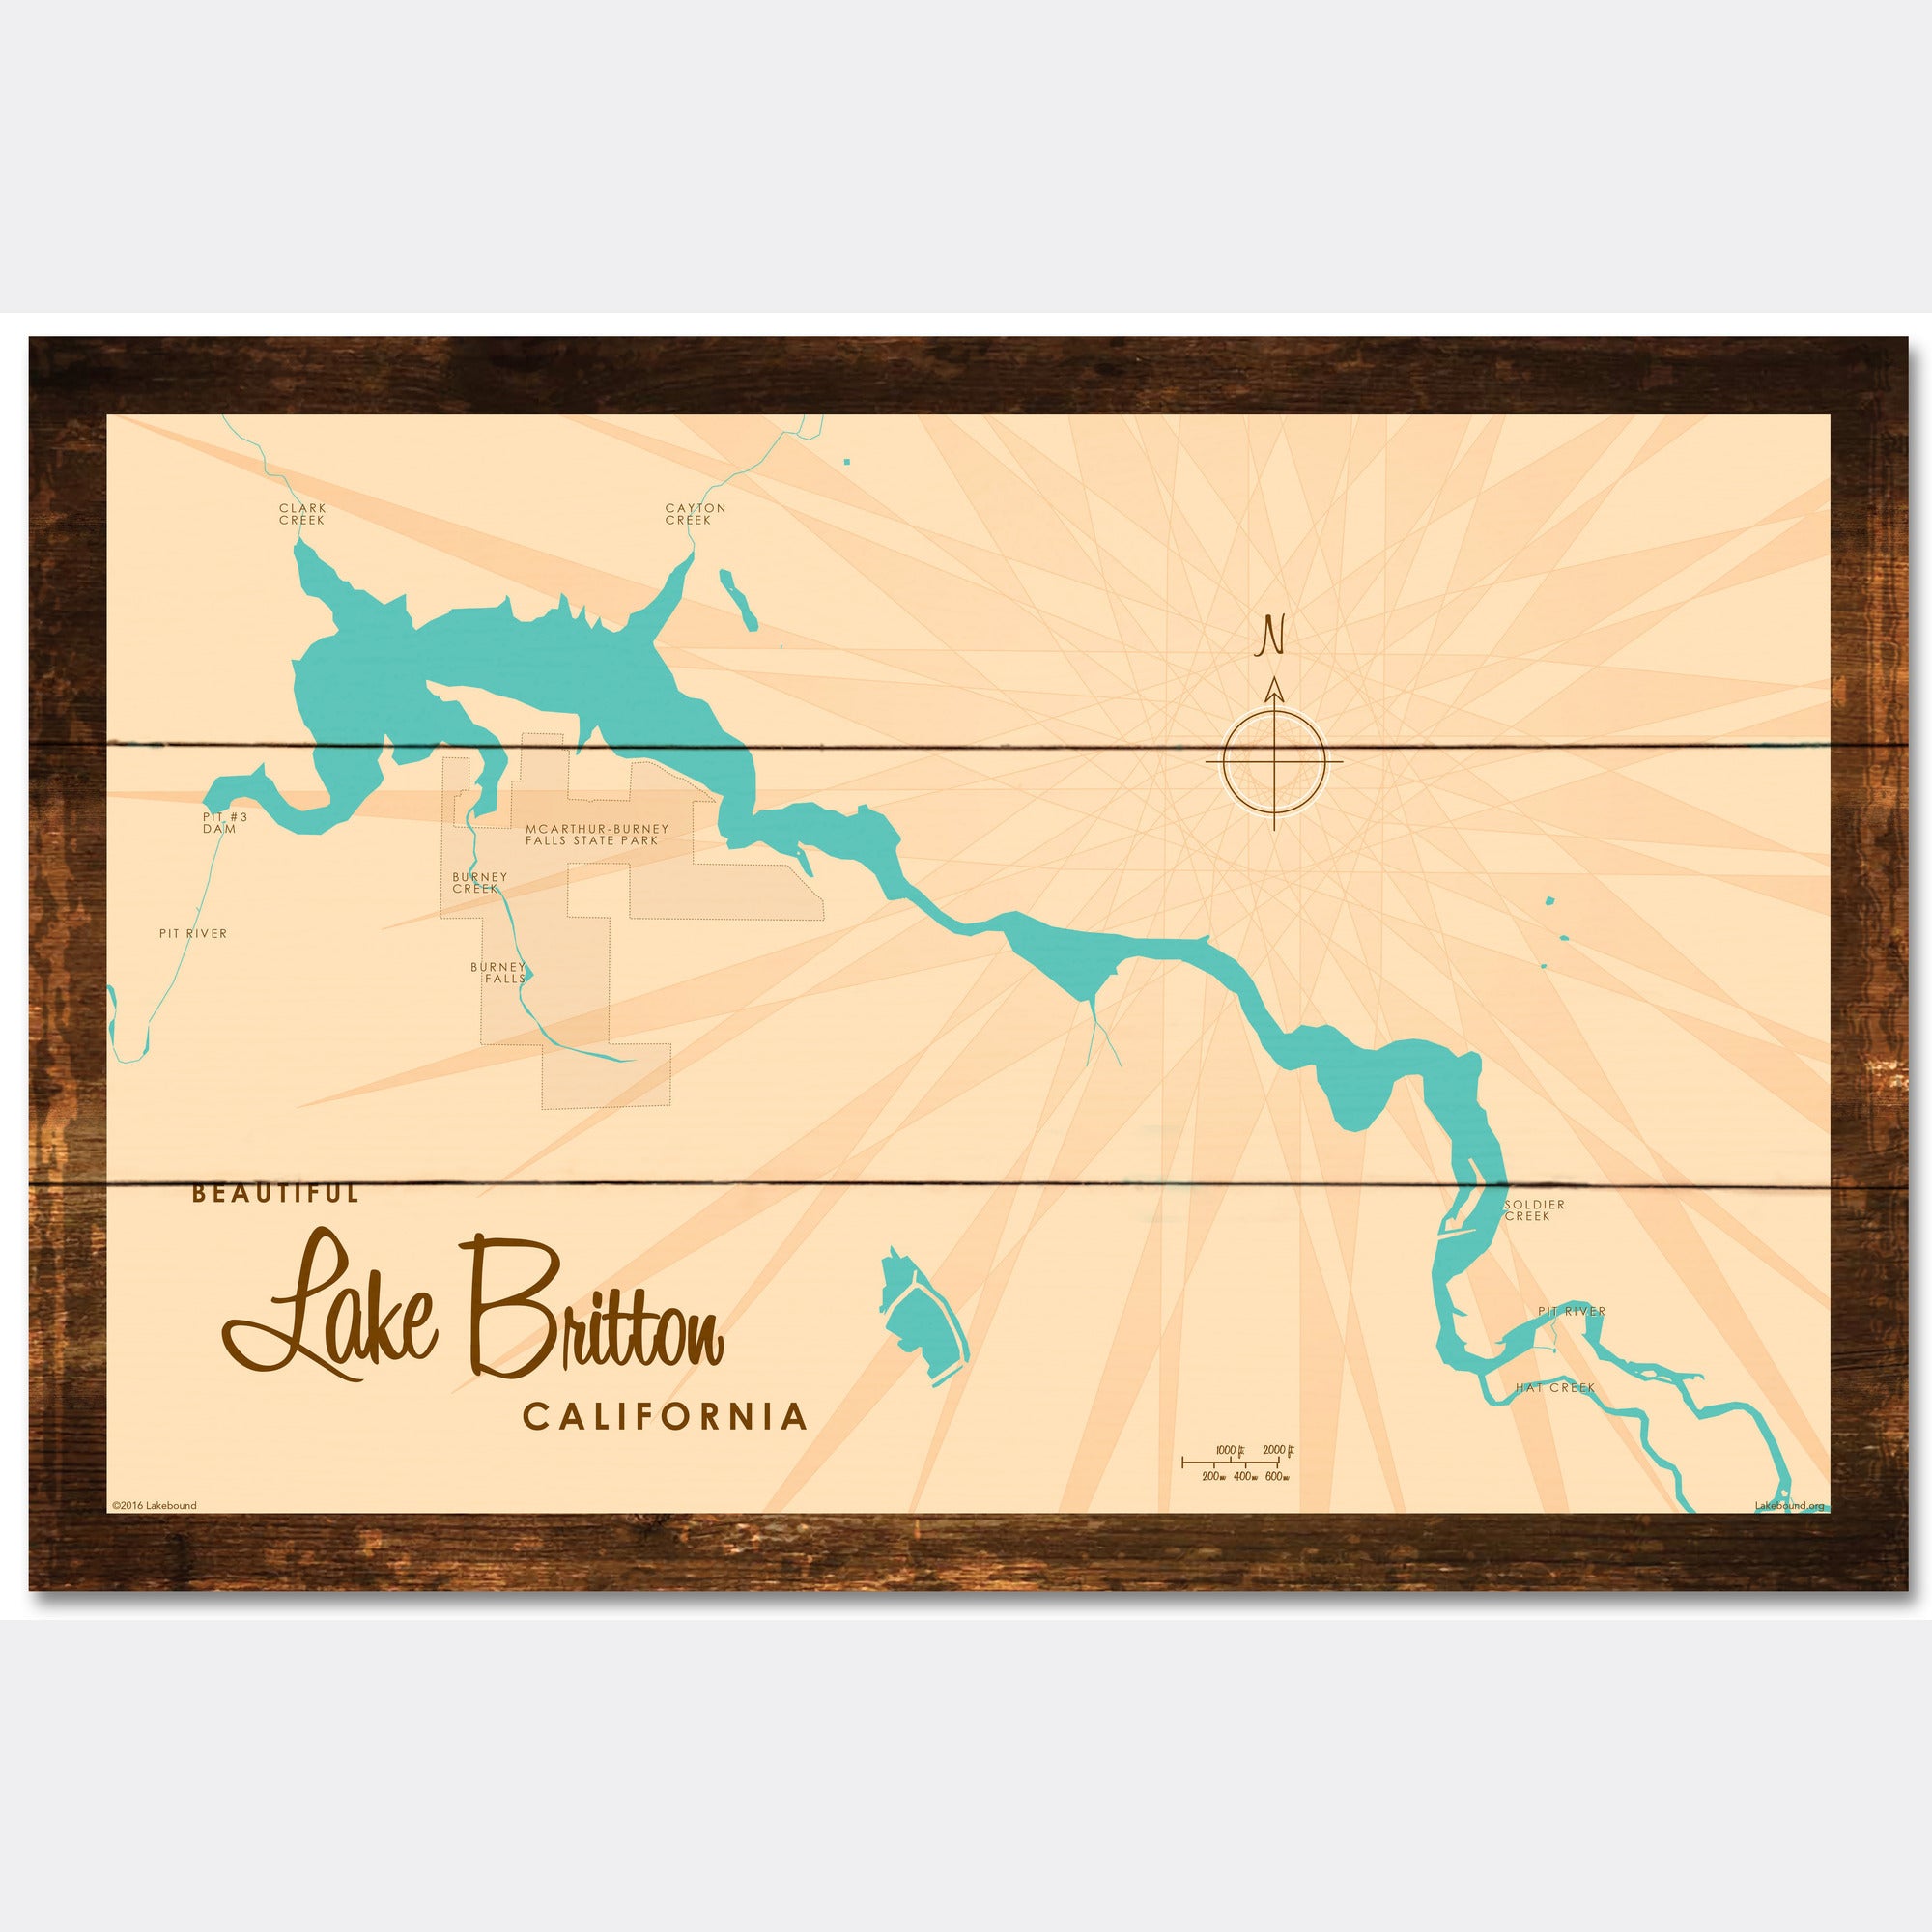 Lake Britton California, Rustic Wood Sign Map Art